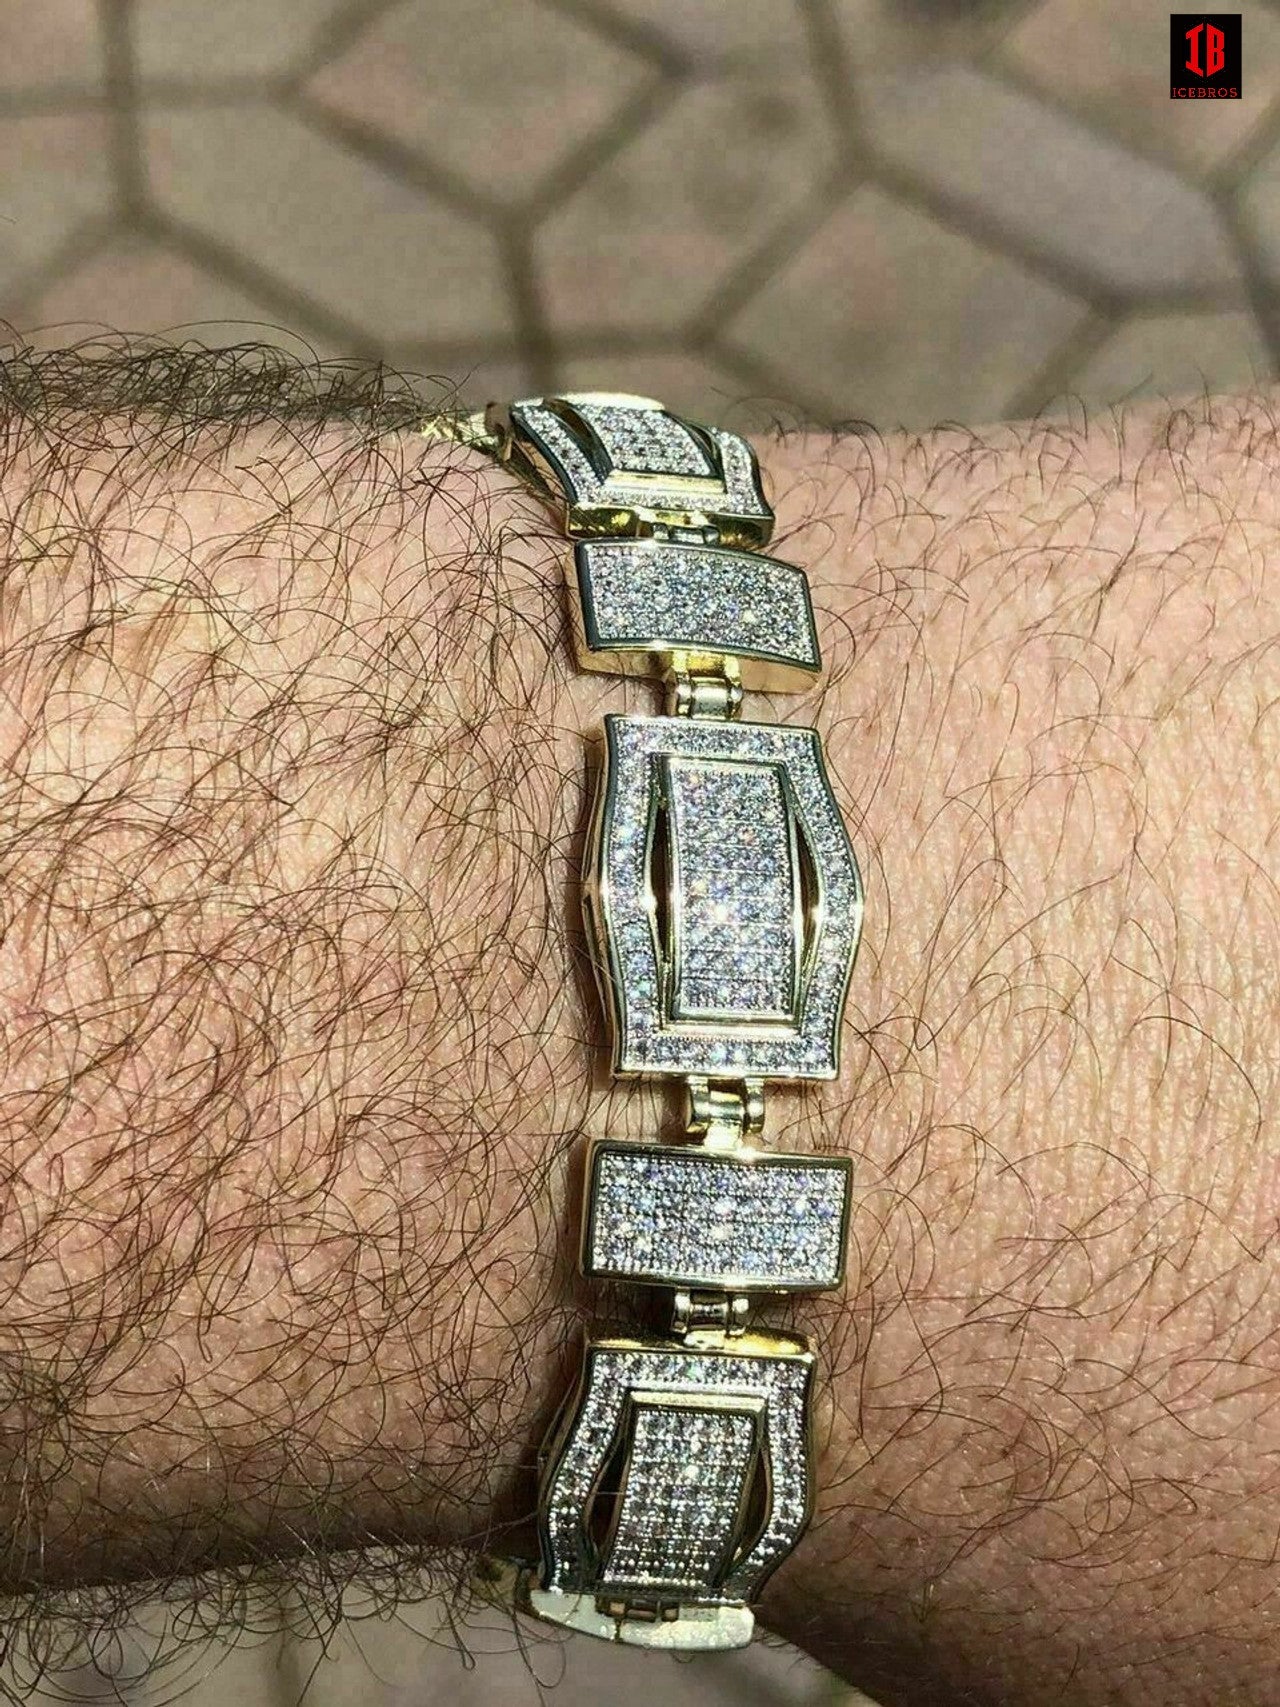 Mens Custom Bracelet 14k Yellow Gold Over Solid 925 Silver 10ct Manmade Diamonds